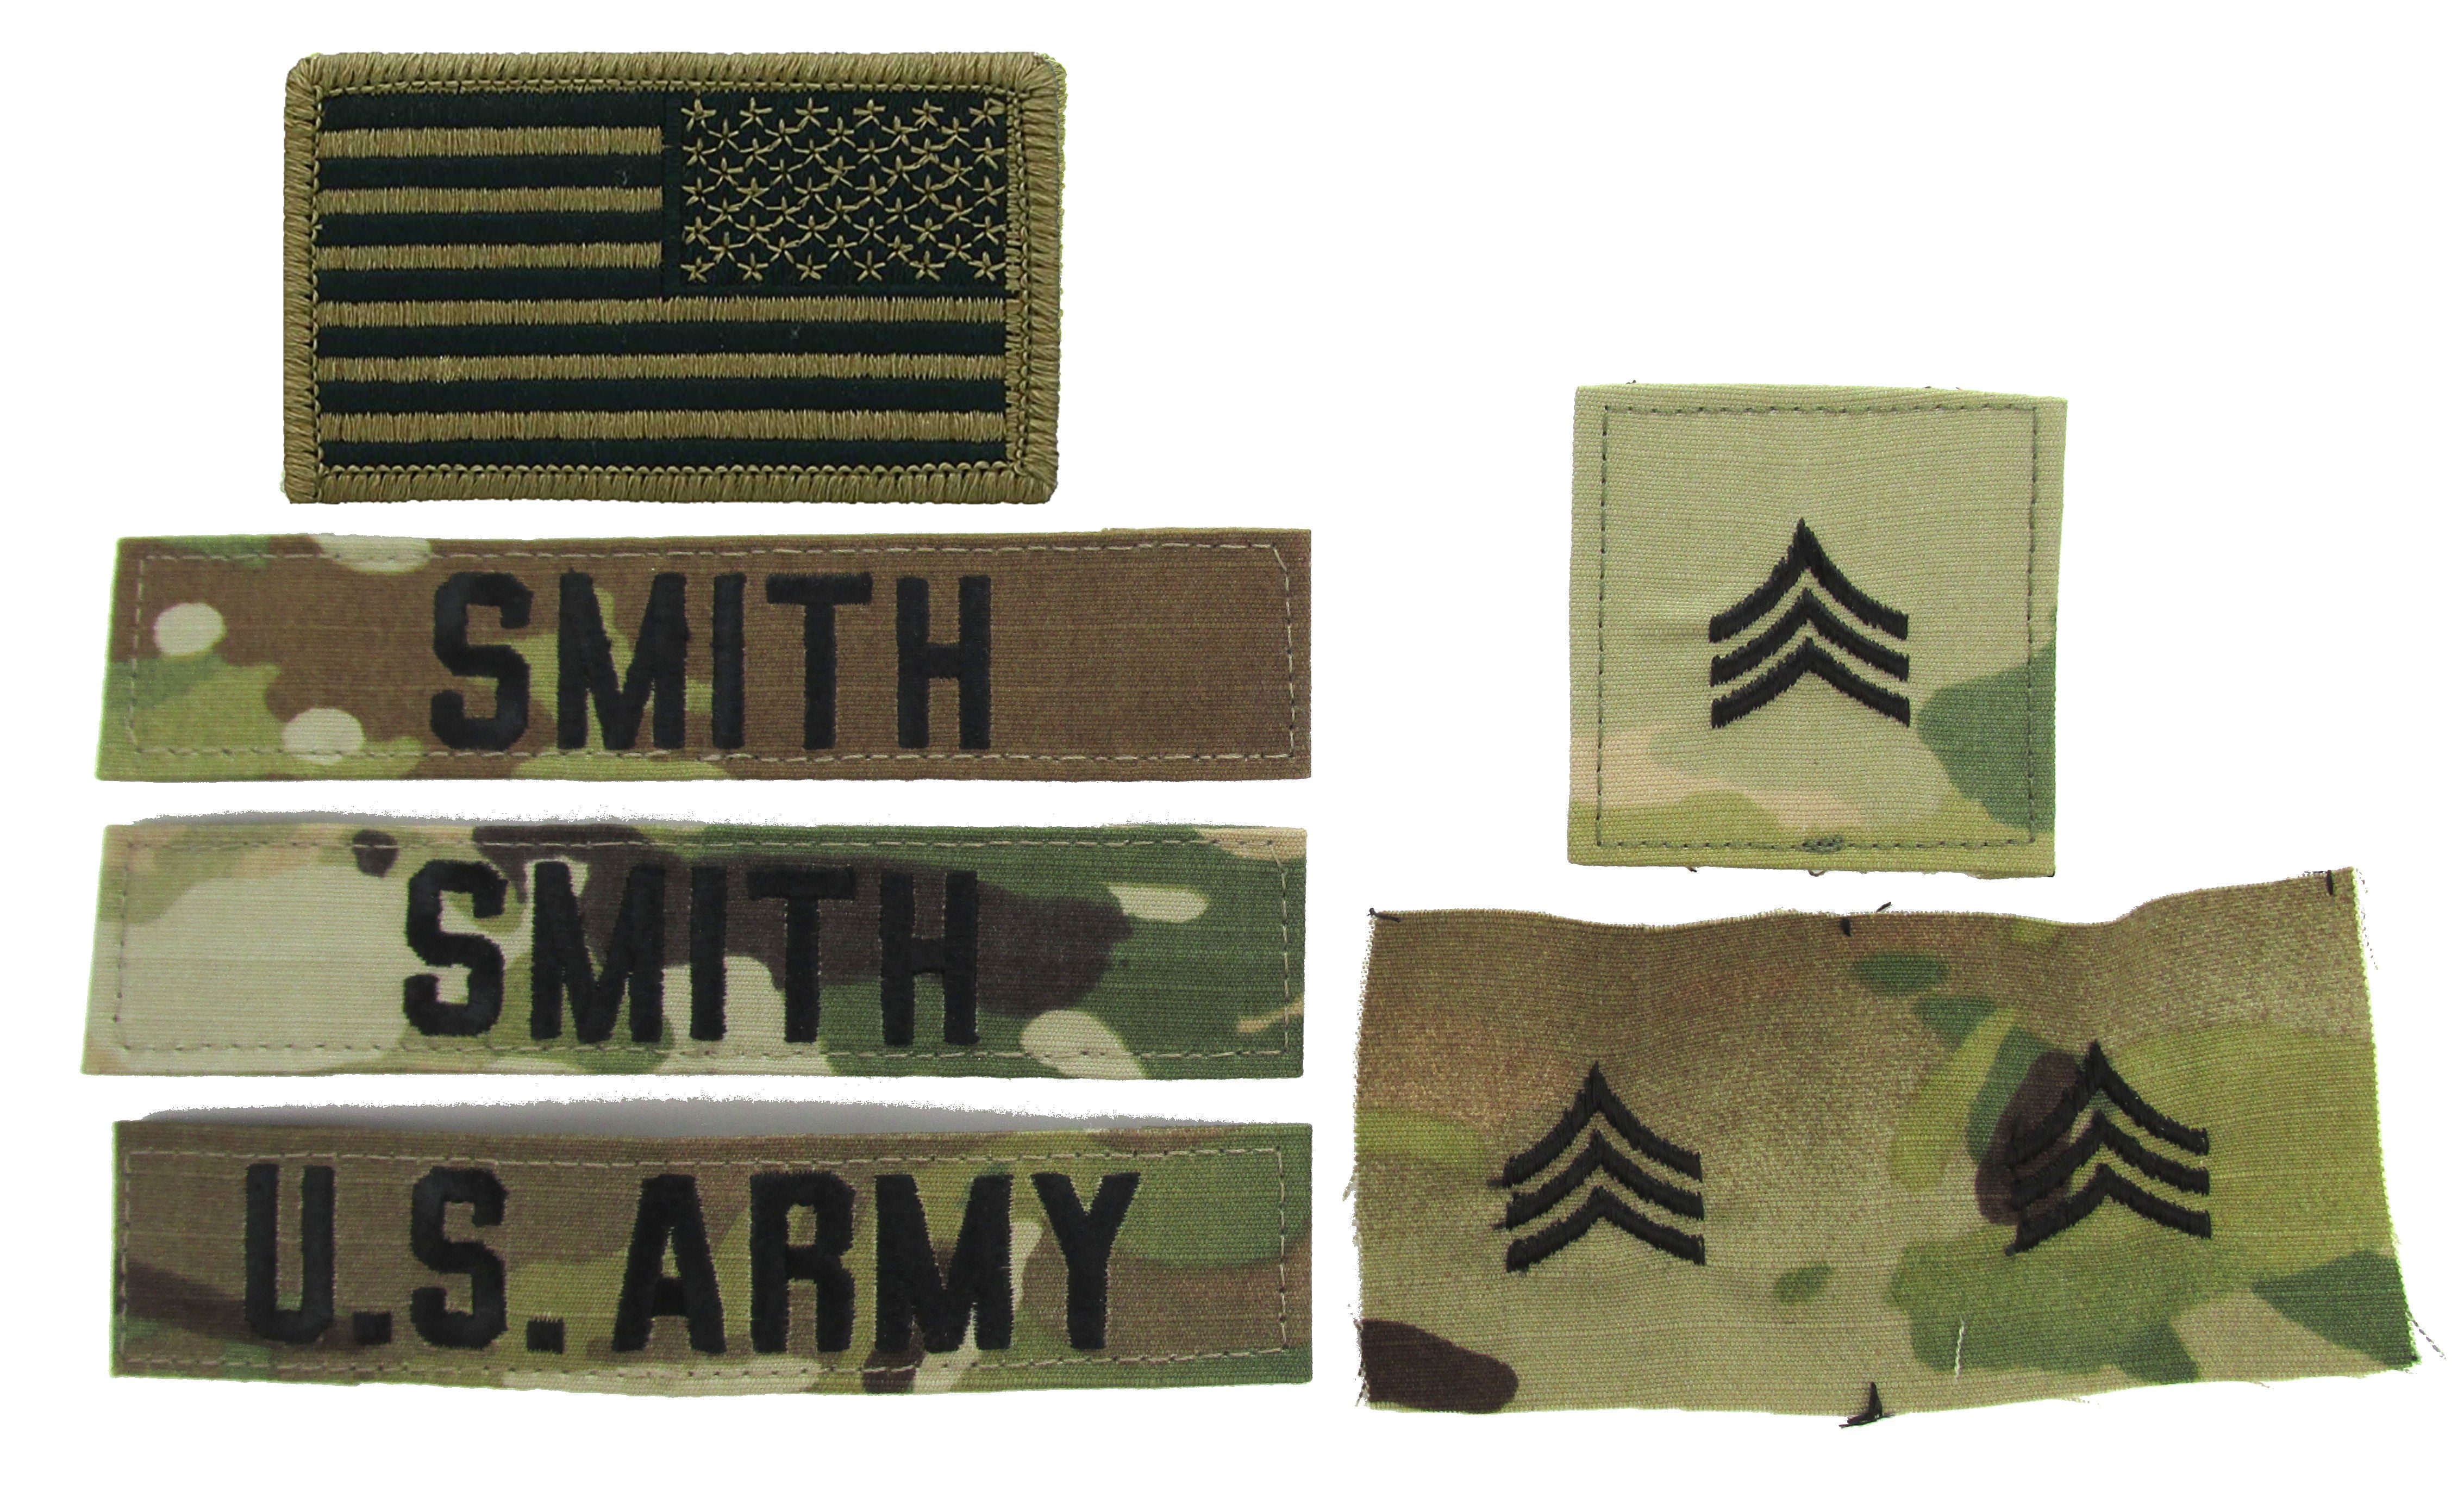 4 Piece Custom Army Name Tape & Rank Set OCP Flag w/ Hook Fastener Backing  - 3-Color OCP